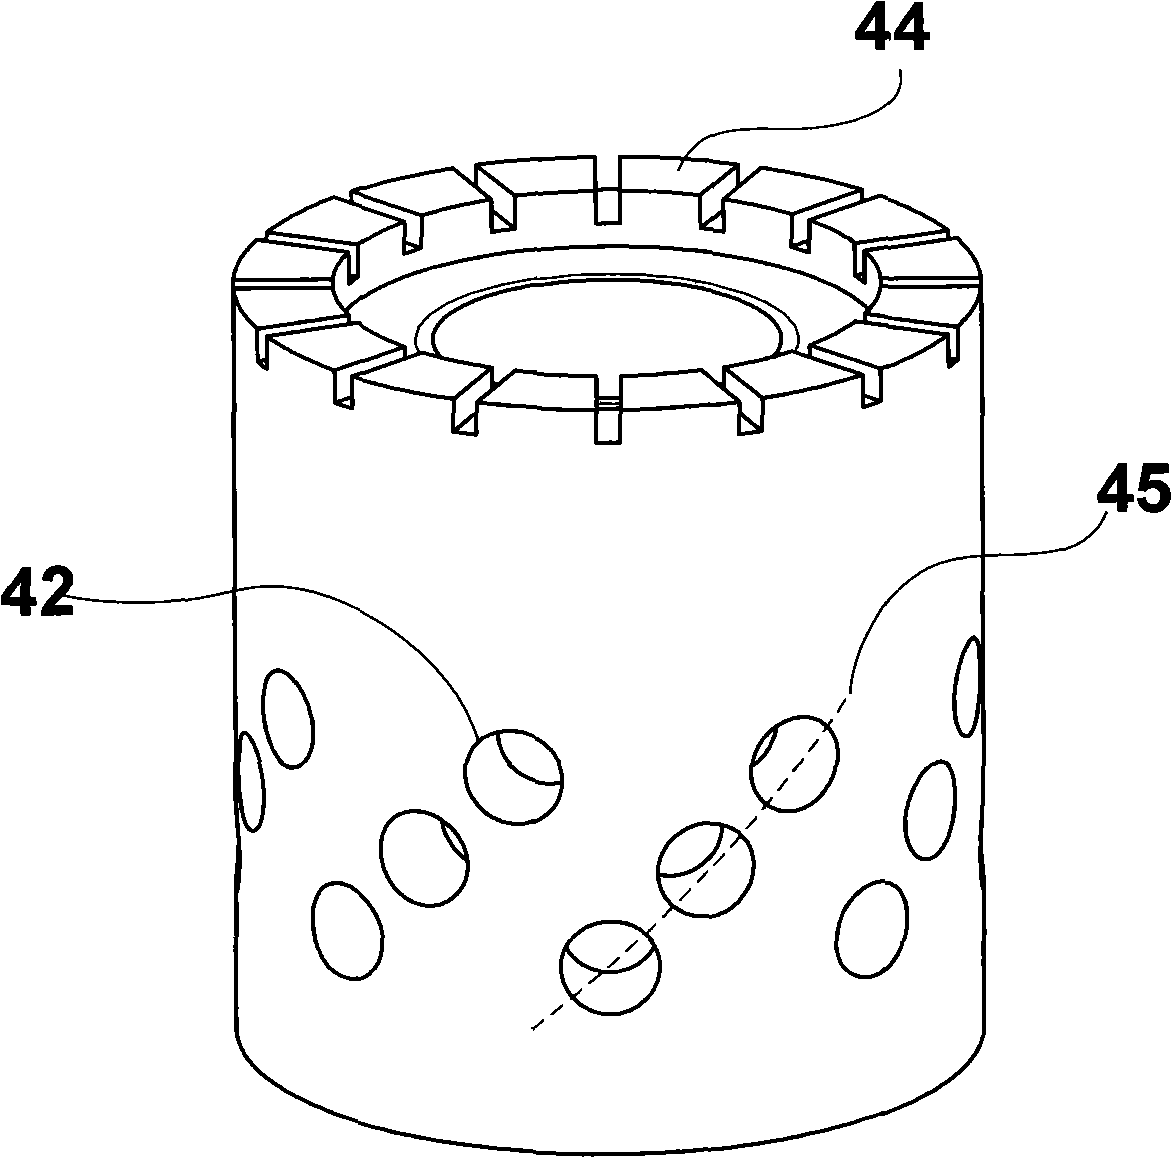 Ultrasonic rotary motor by using longitudinal-torsional vibration converter with holes